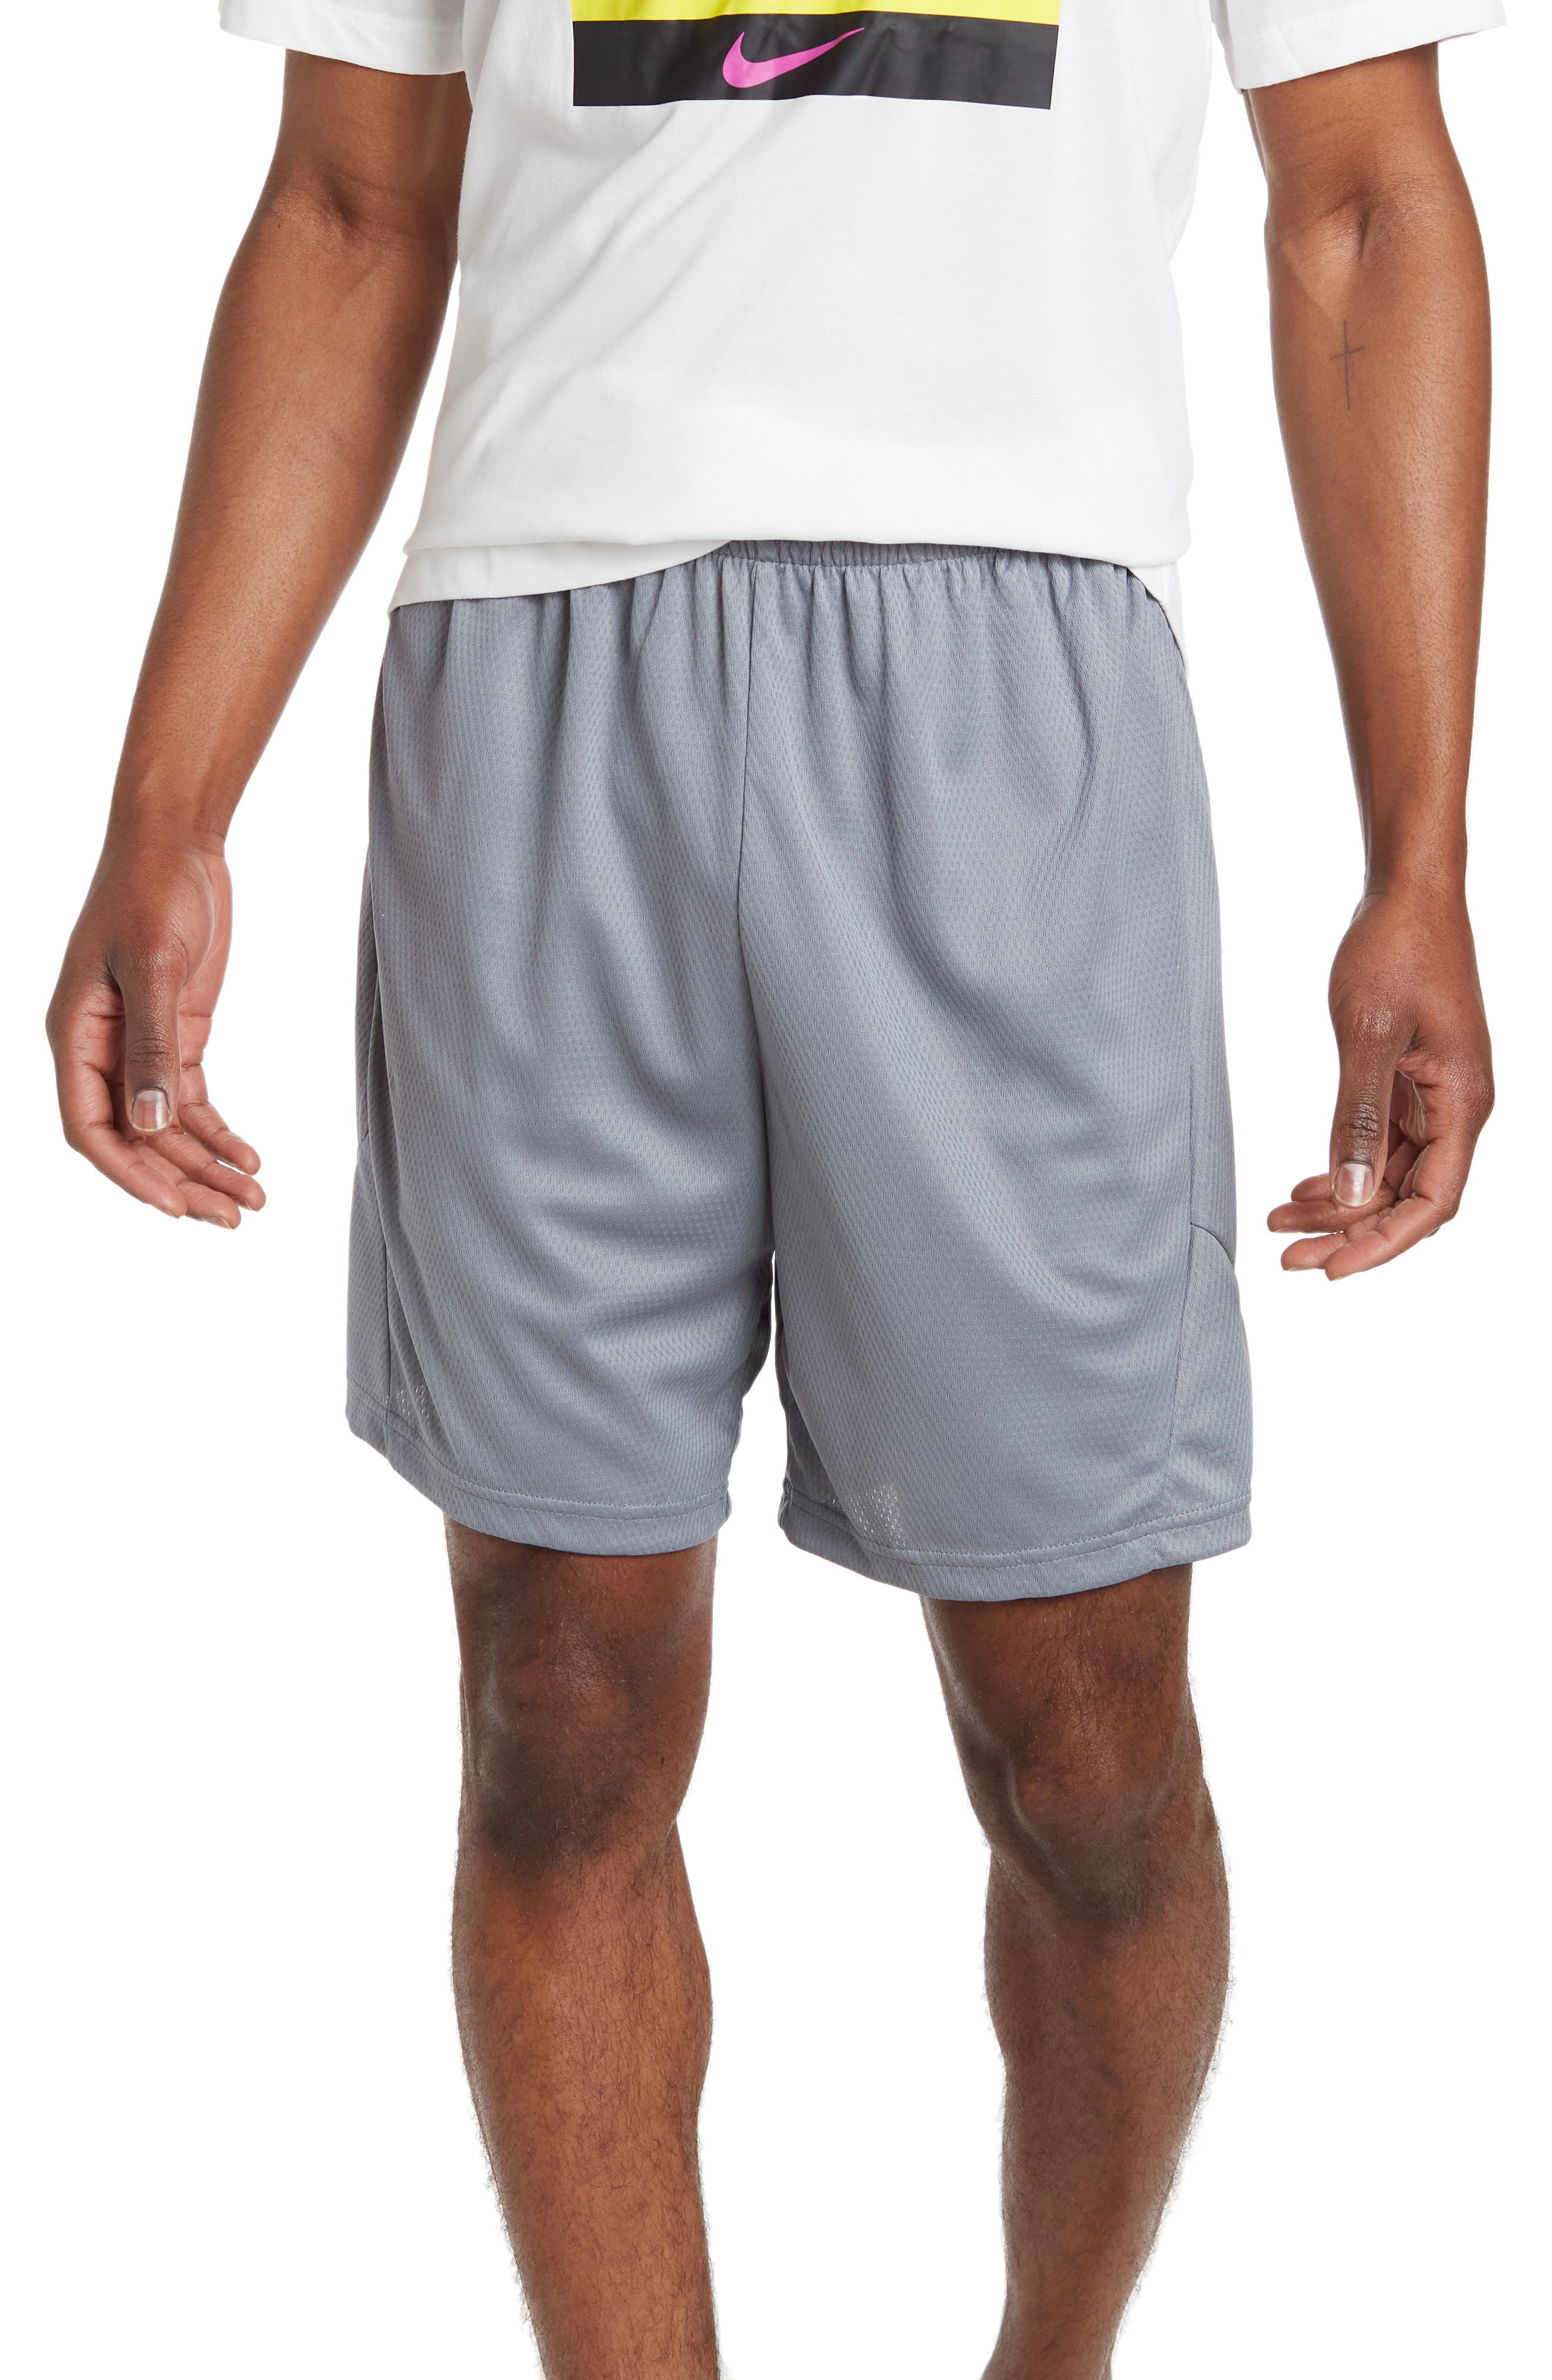 Men’s Multipurpose Workout Shorts Ronin Signature Athletic Shorts for Men 